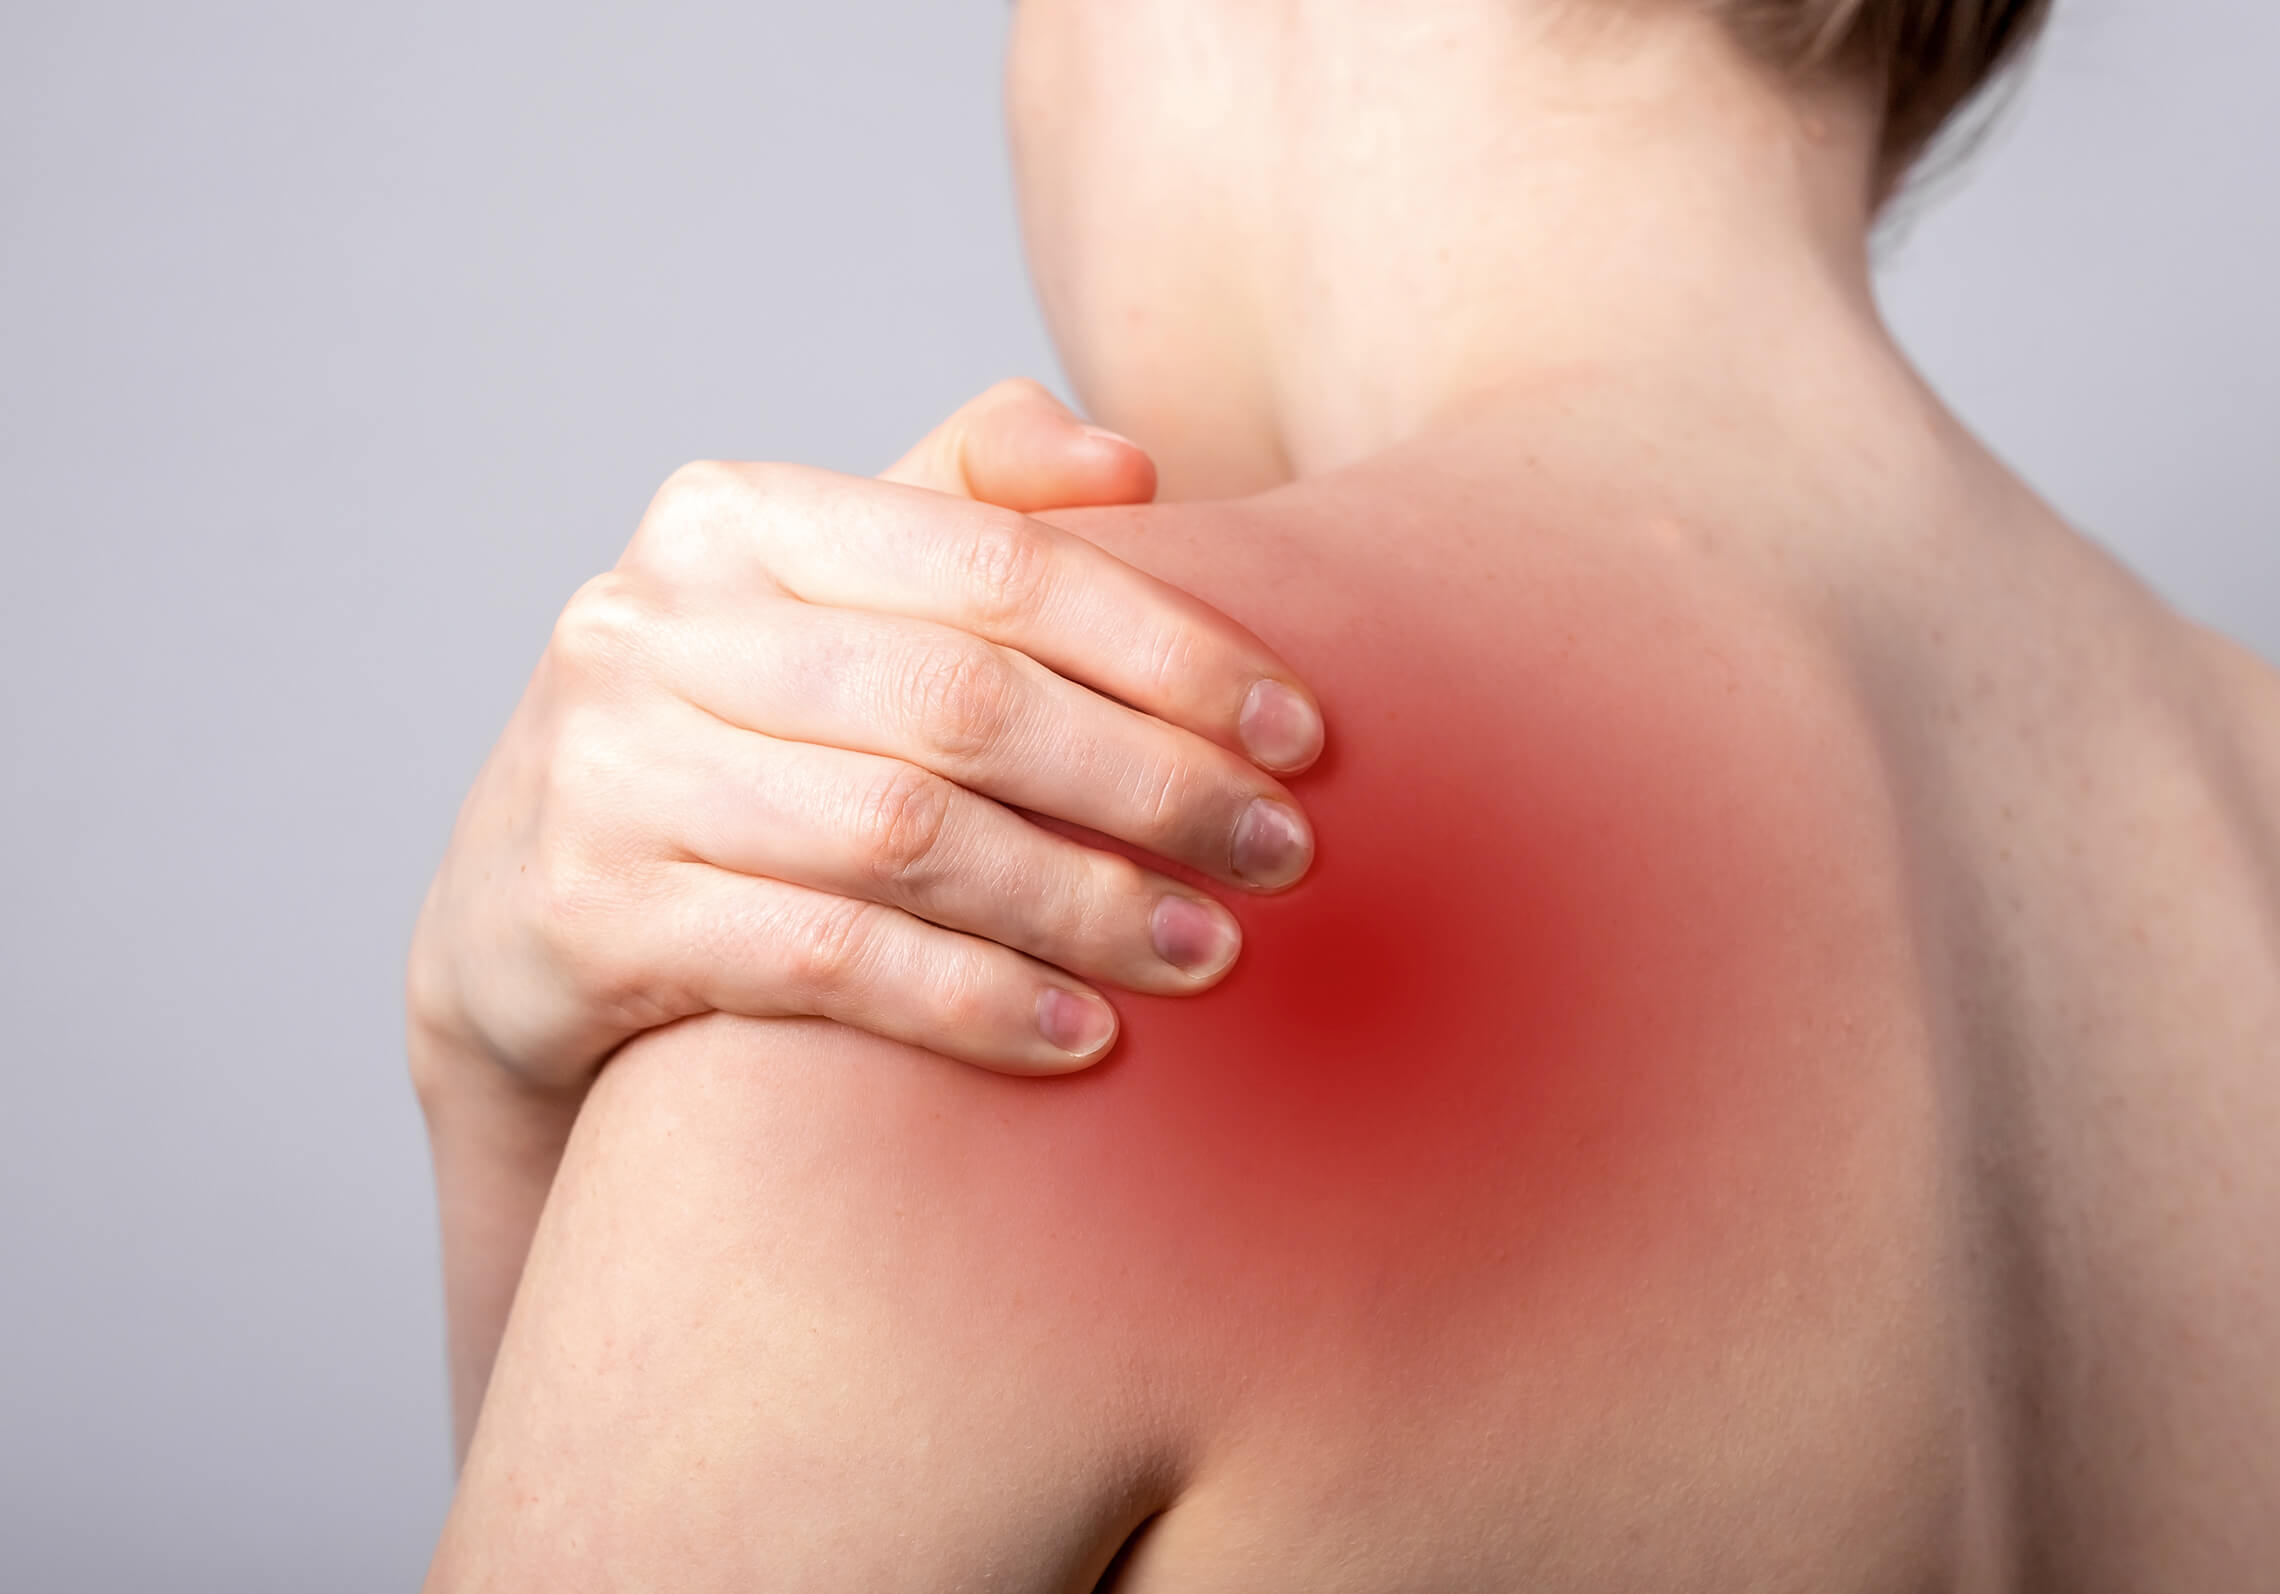 Rücken- und Gelenkschmerzen durch Arthrose – Nacken- Armschmerzen, Mausarm durch Büroarbeit – bei beiden Beschwerden kann man myofasziale Triggerpunkte behandeln